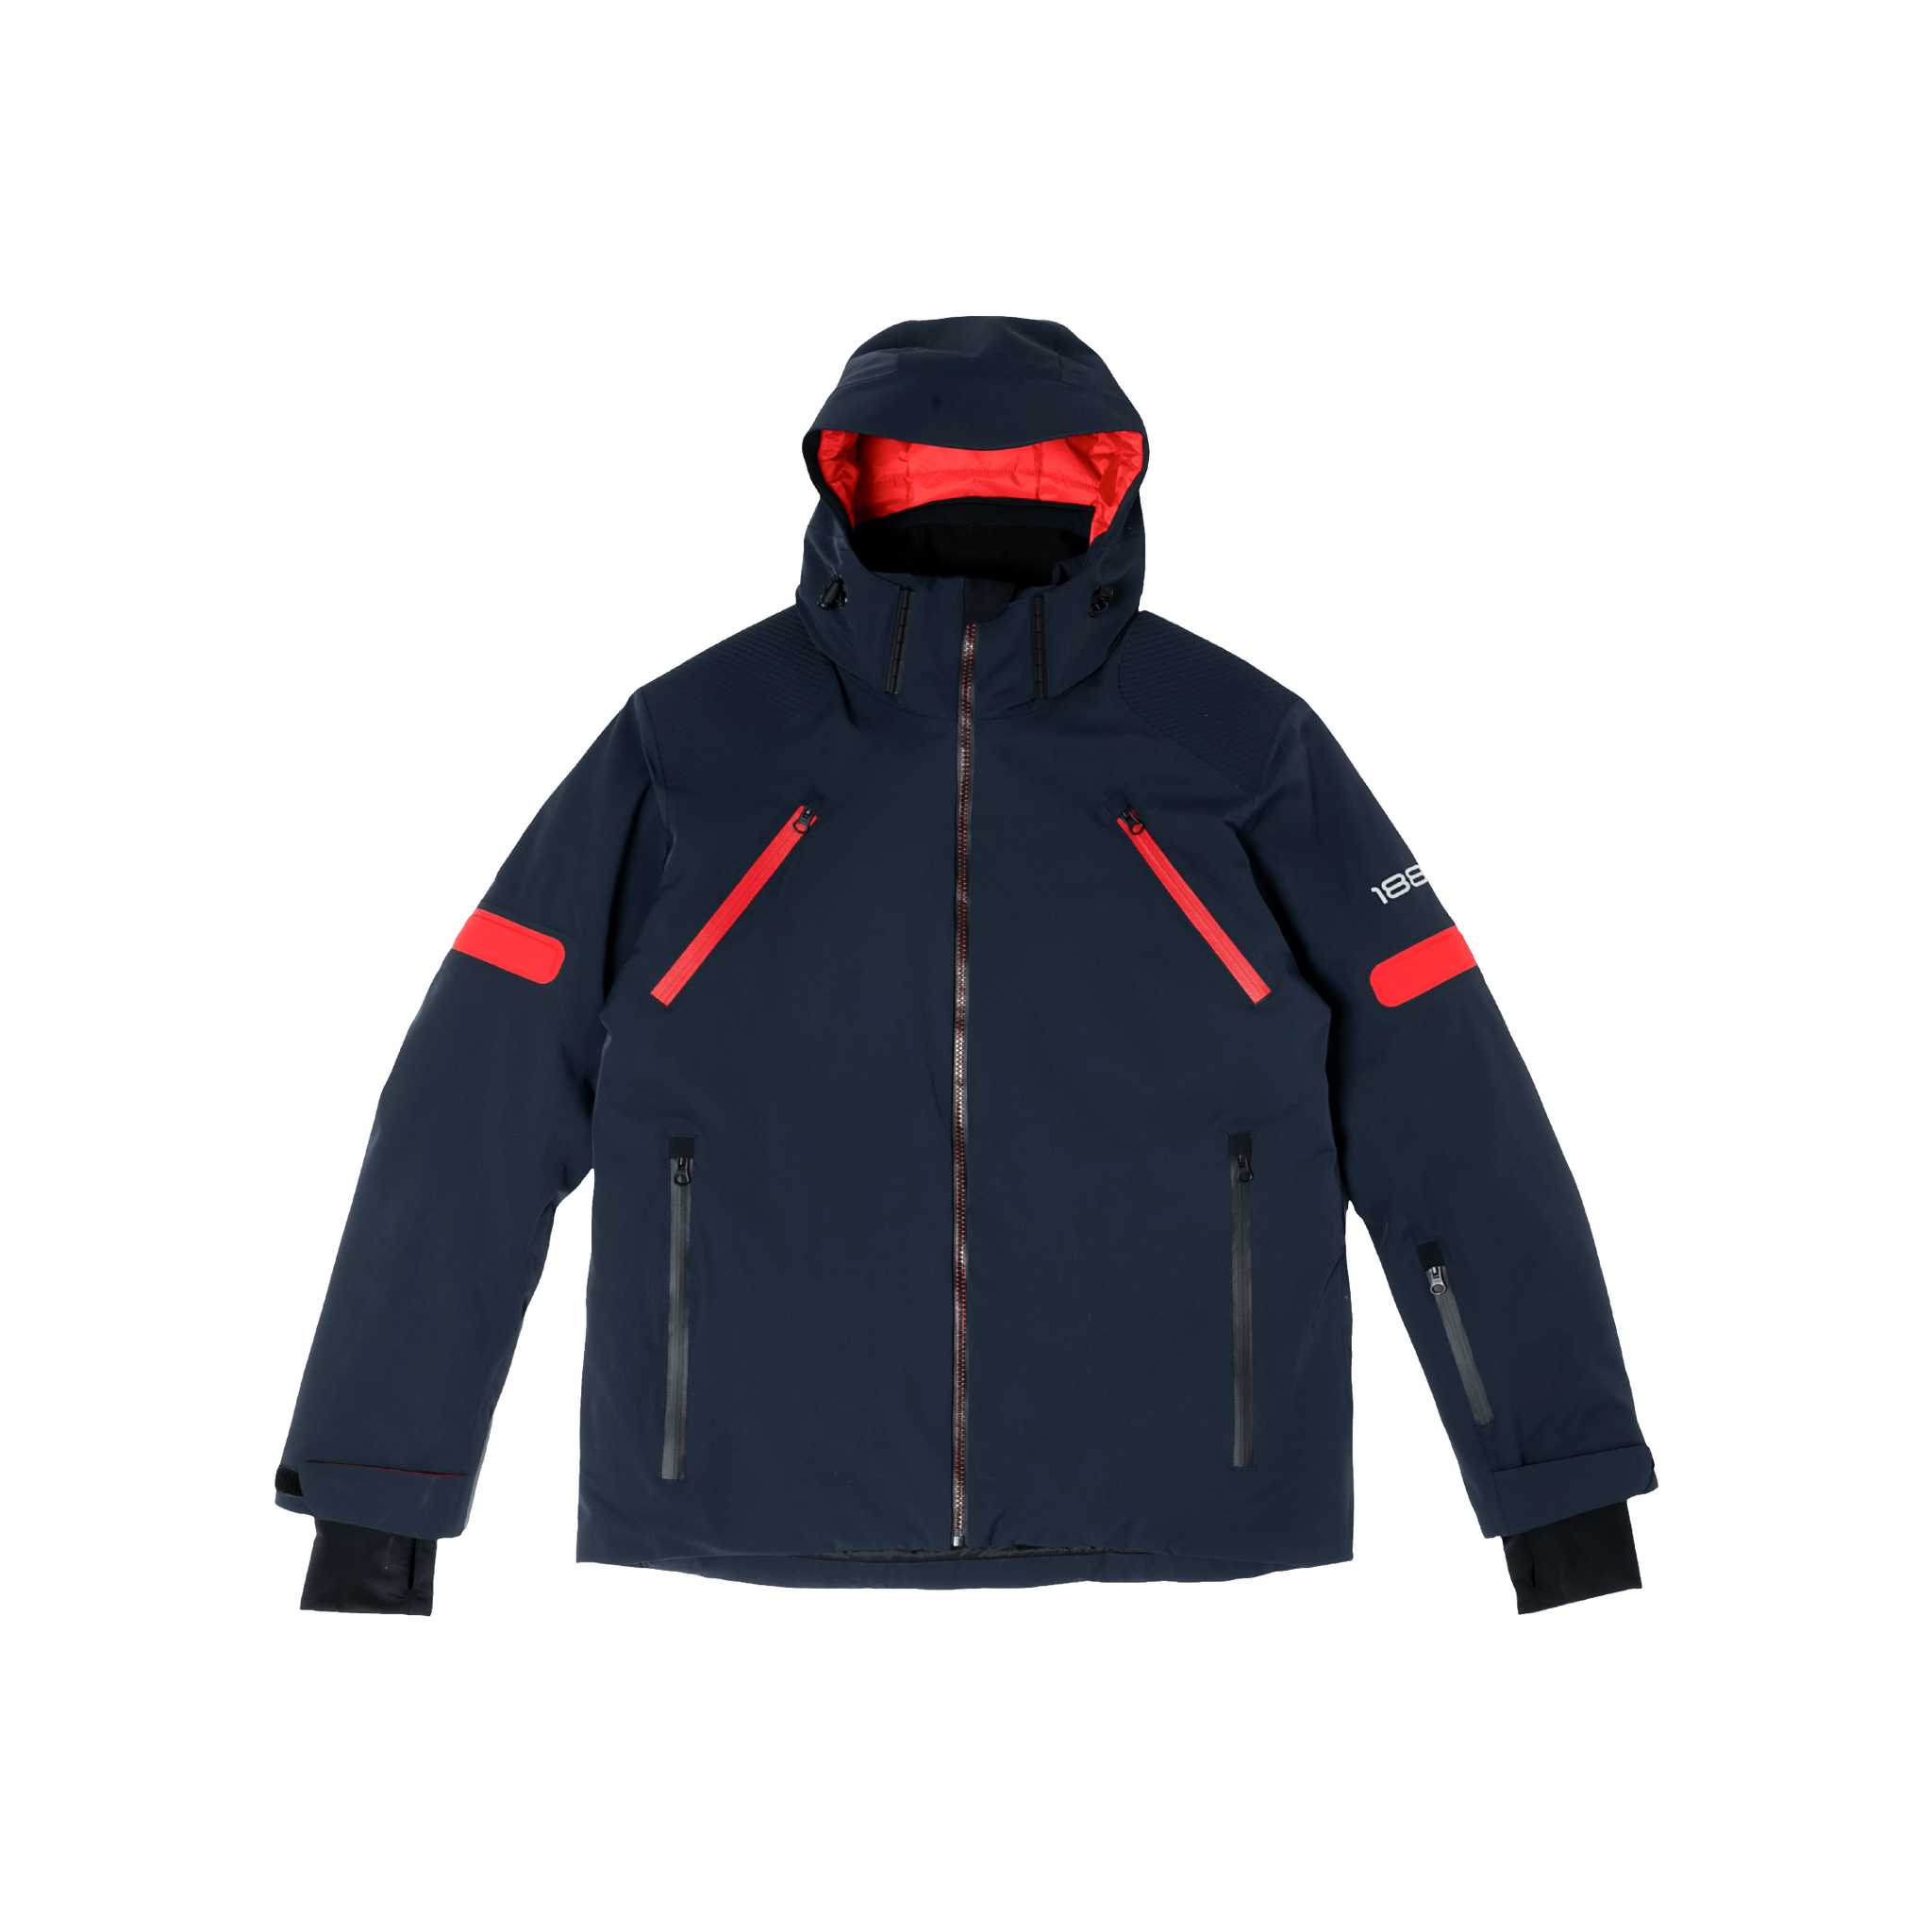 Ski Jacket In Navy Blue & Red - Navy Blue